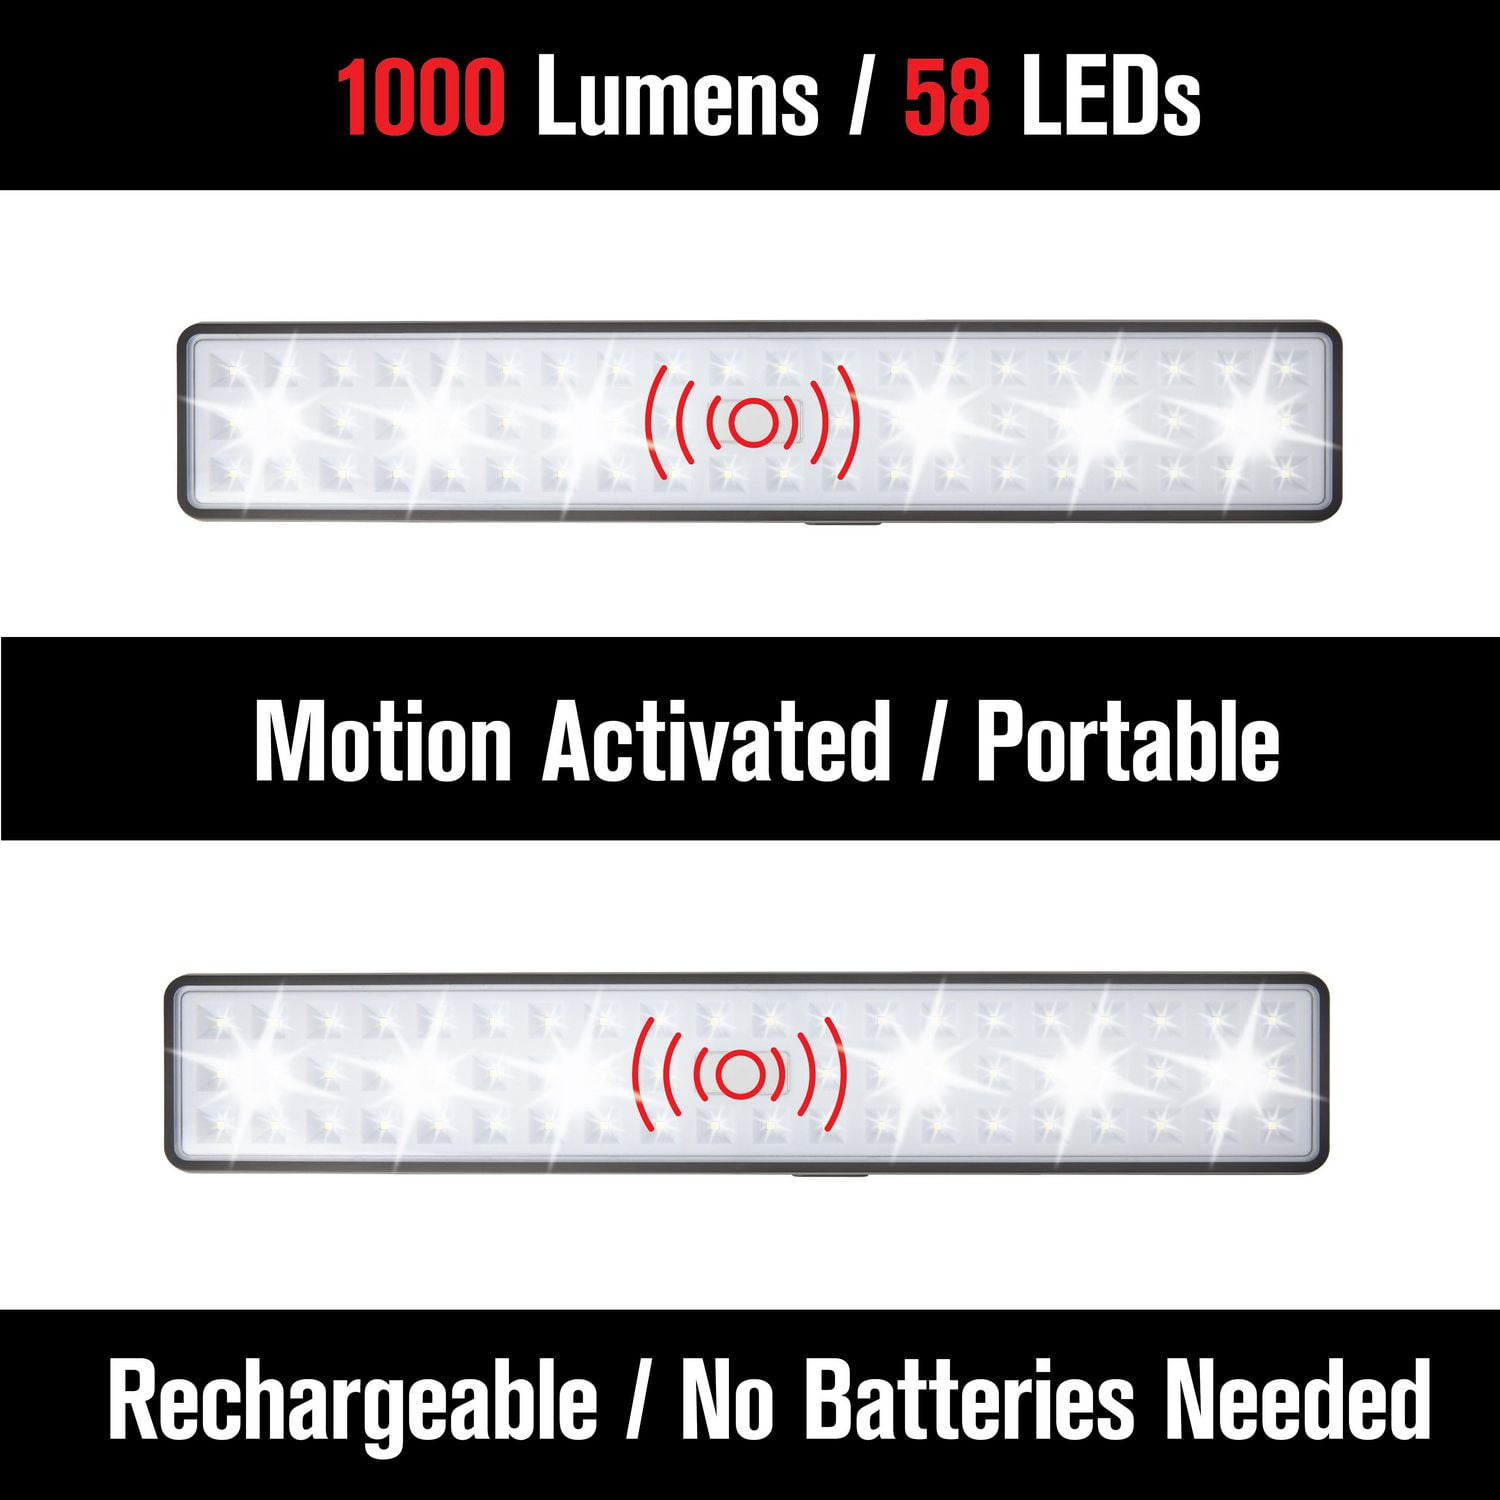 Bell + Howell Rechargeable Light Bar 1000 Lumens Super Bright